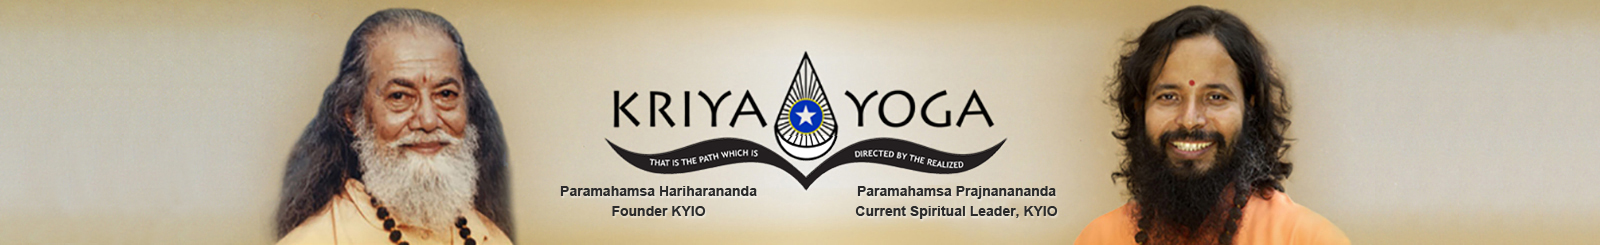 Kriya Yoga International Organizations